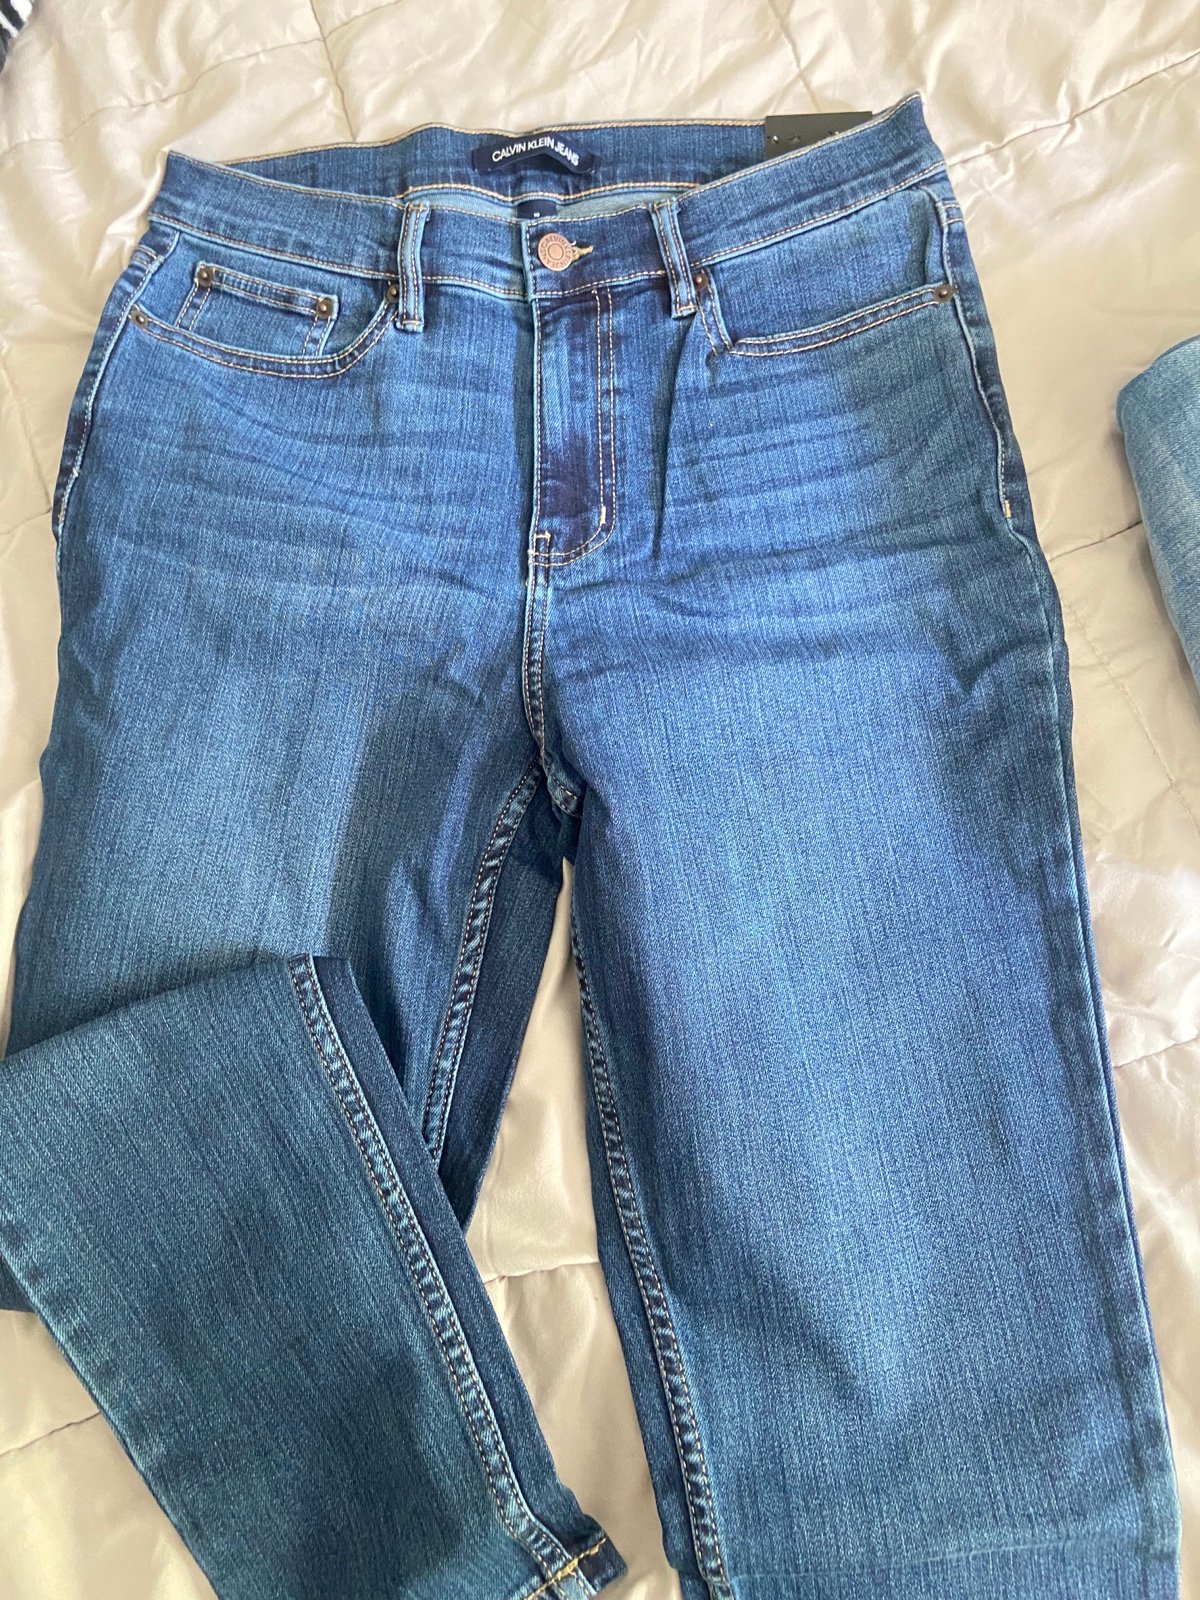 Cheap Calvin Klein jeans NGa9OT2hs Online Shop